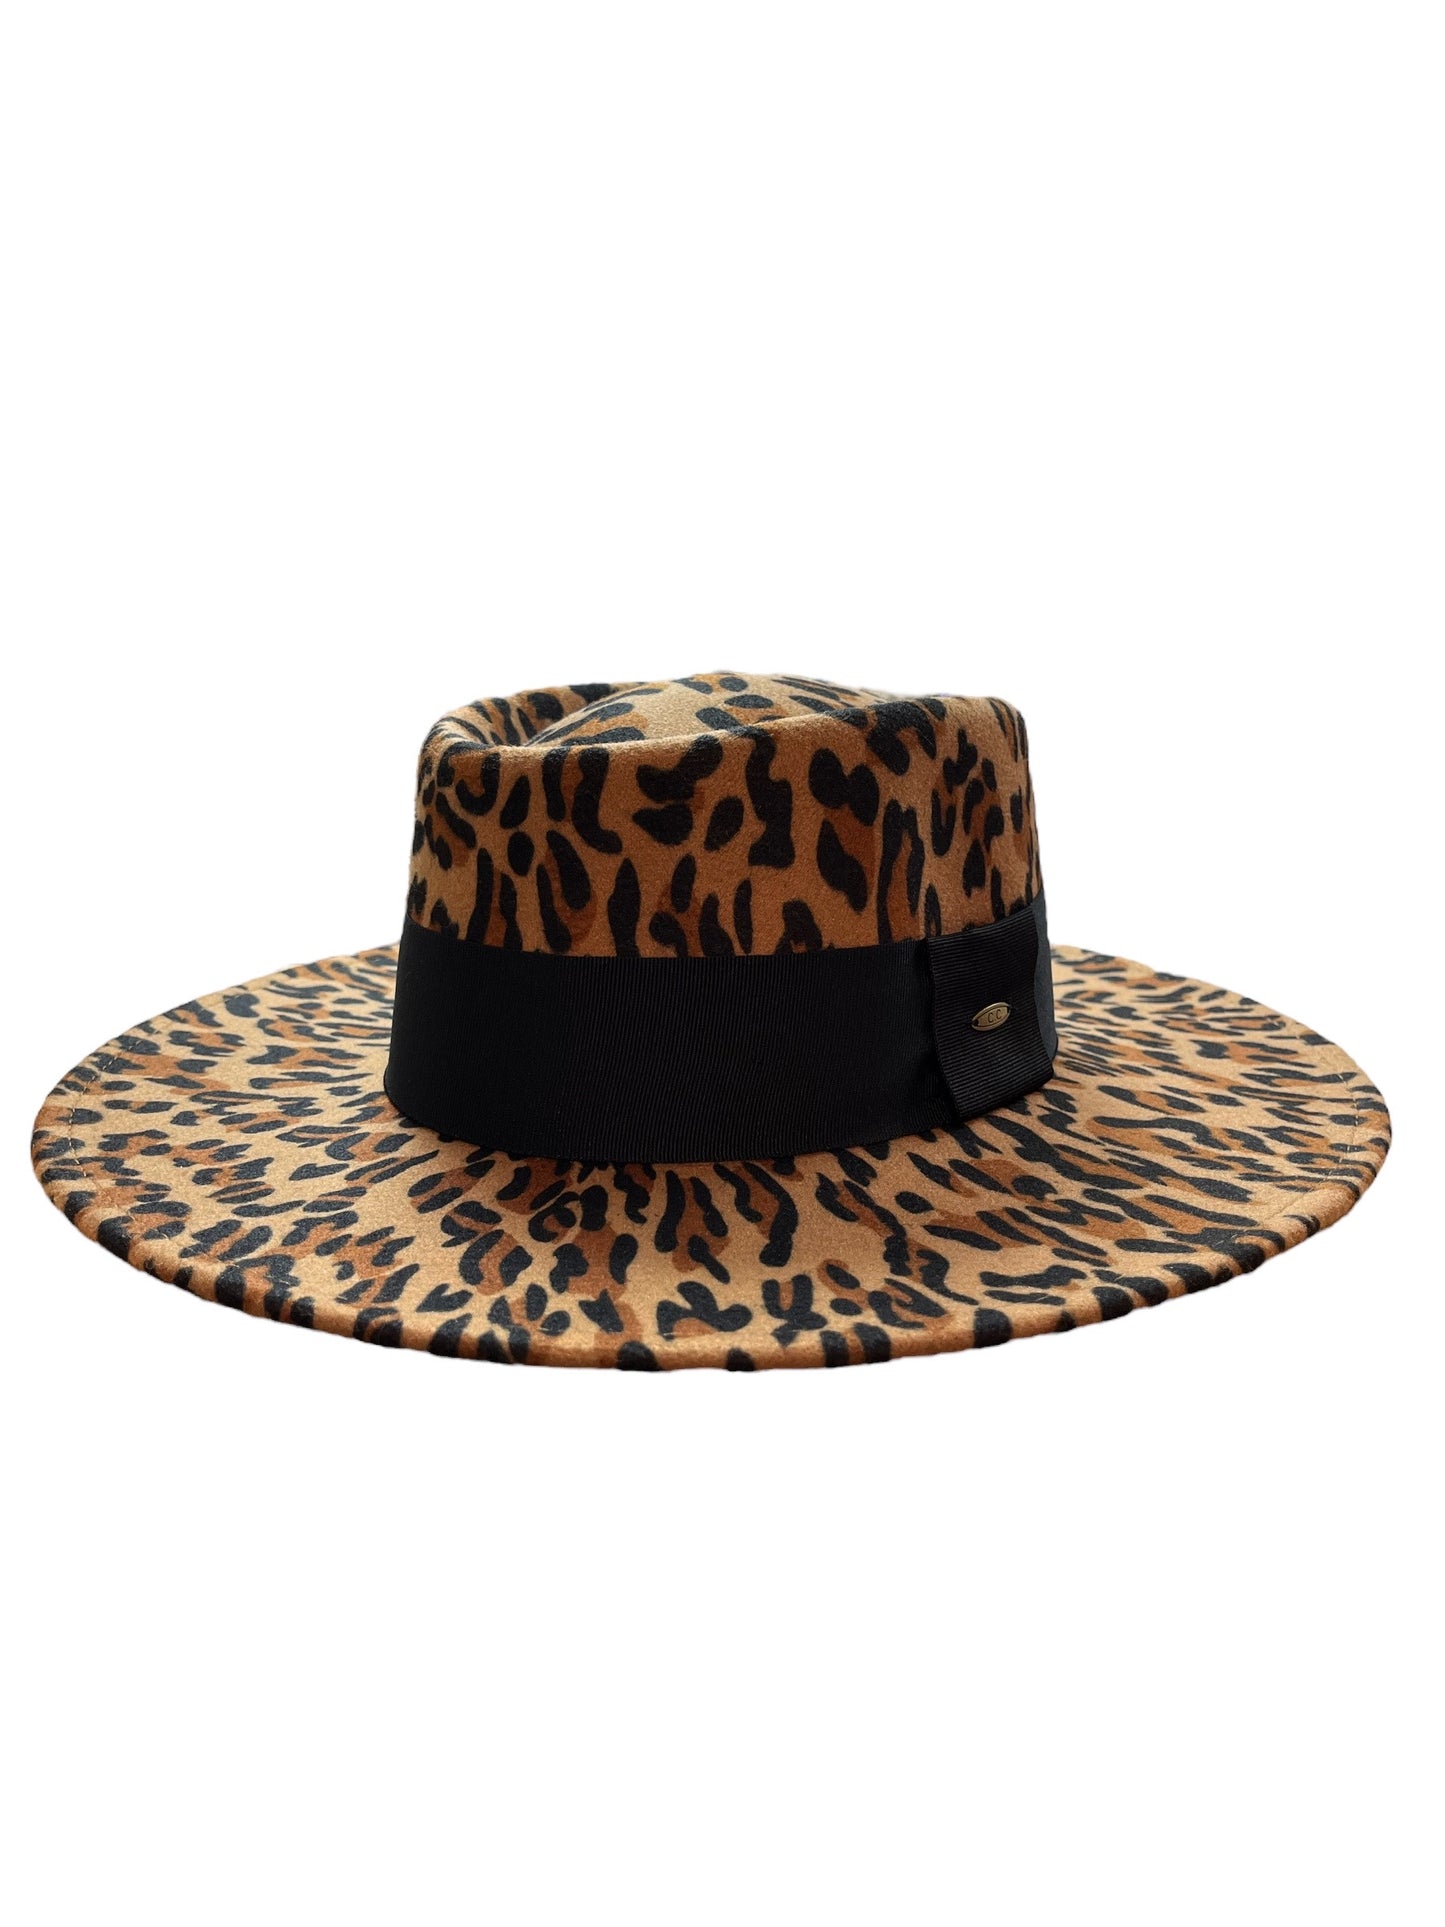 Leopard Print CC Hat